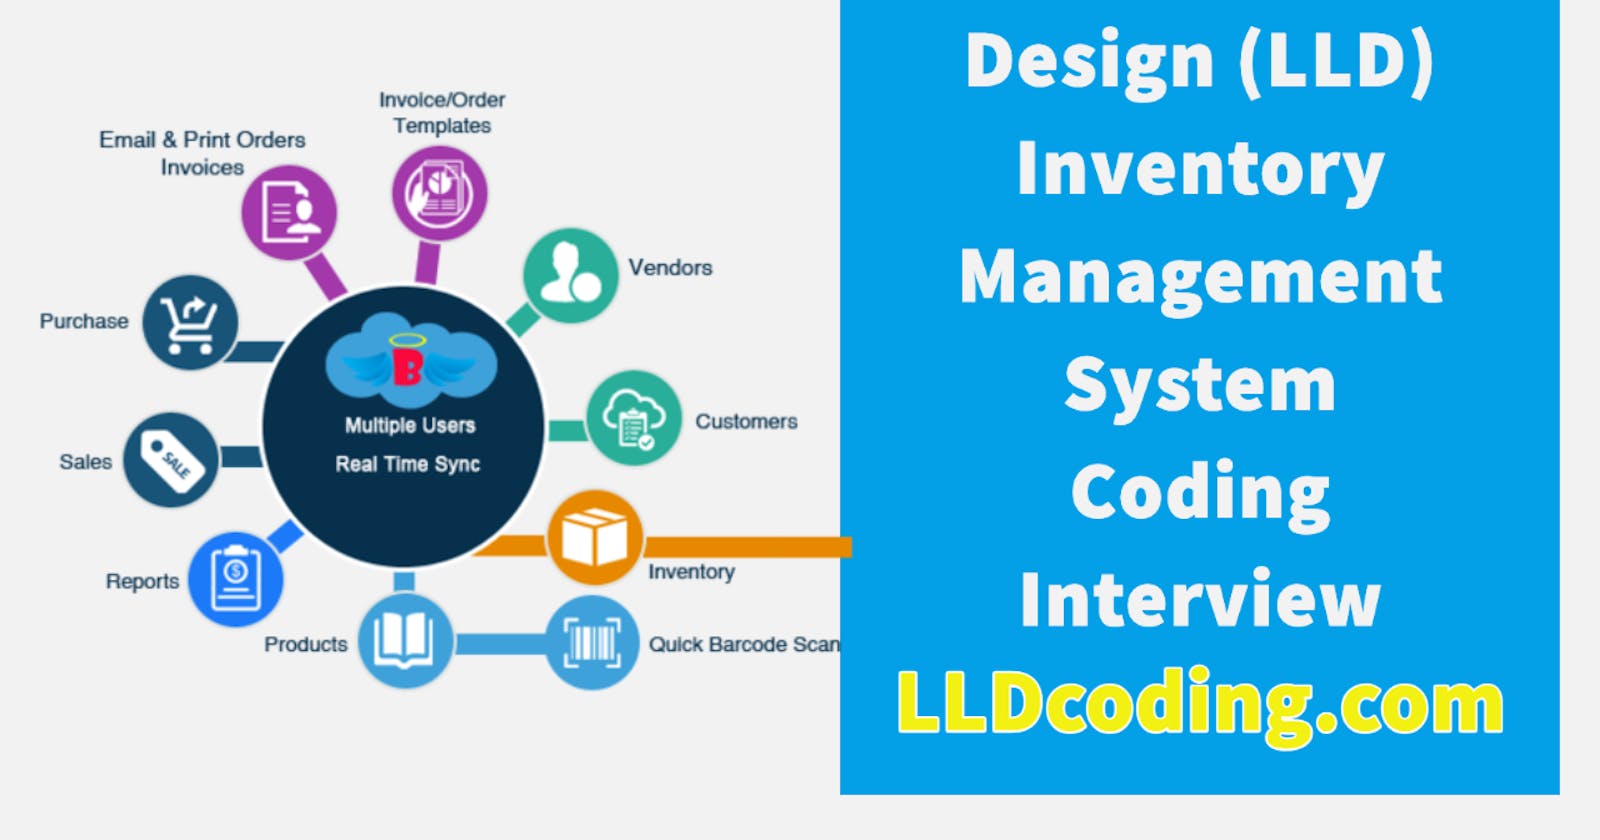 Design (LLD) Inventory Management System  - Machine Coding